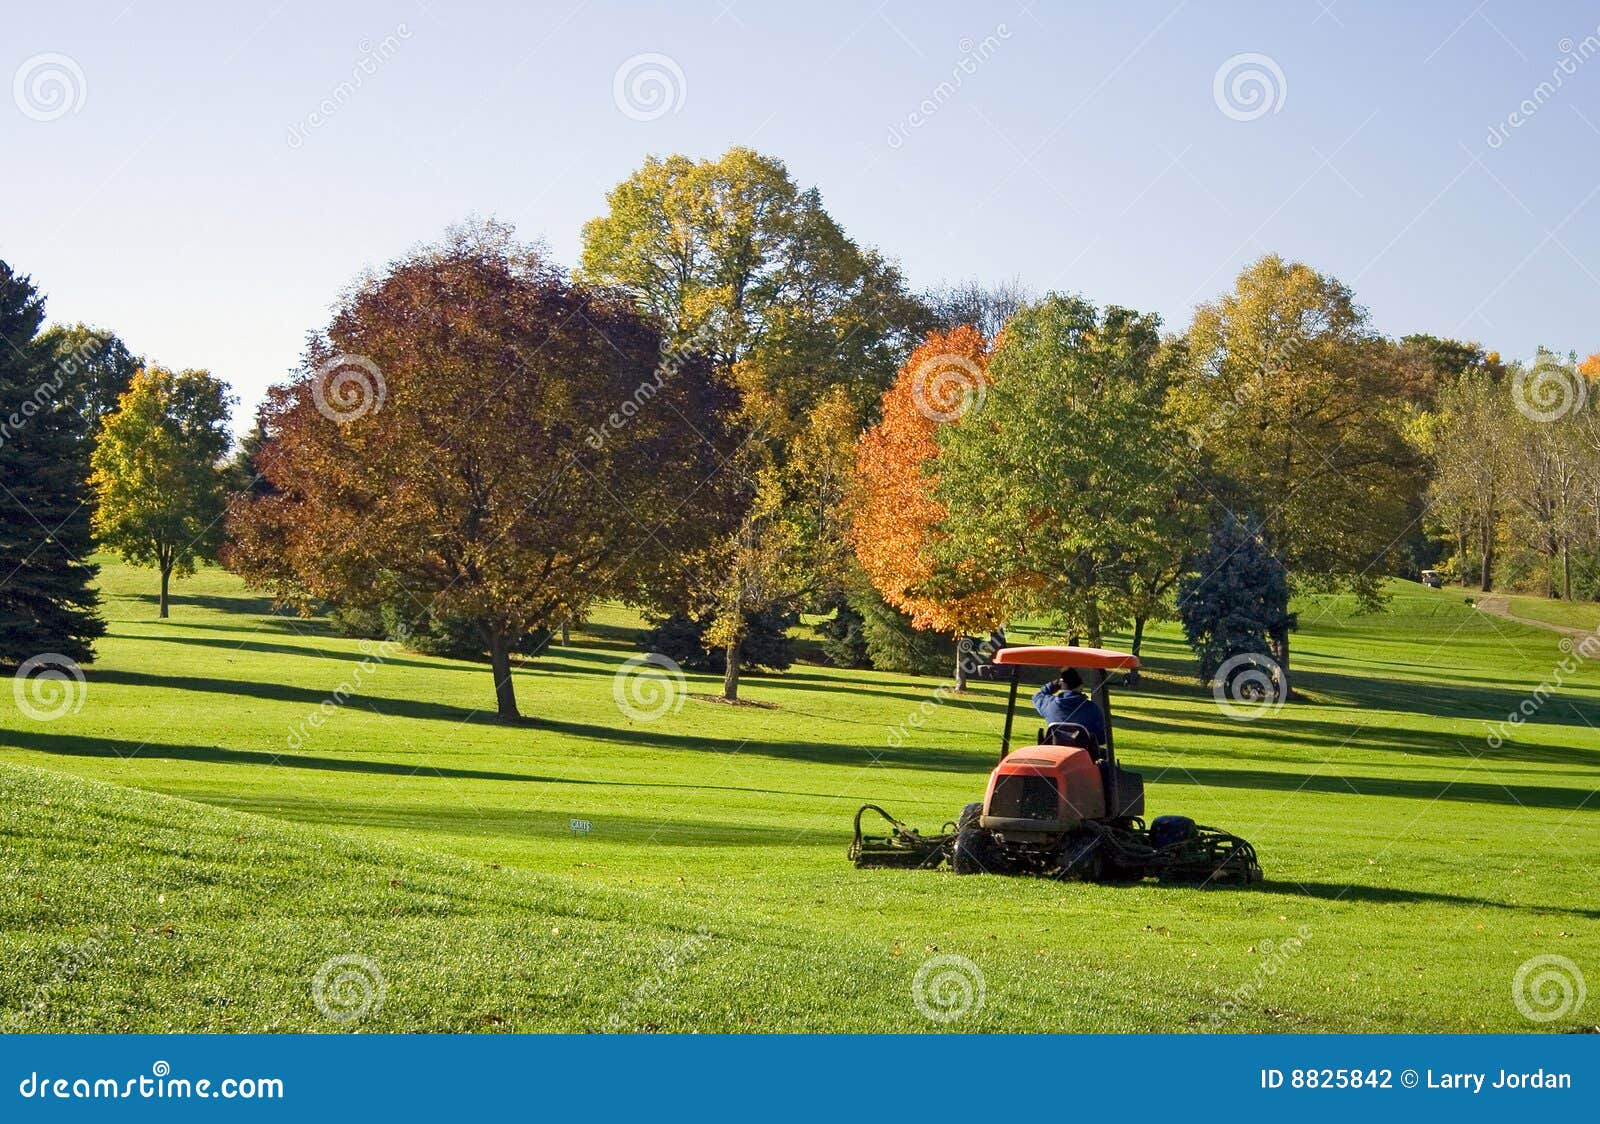 golf course mower